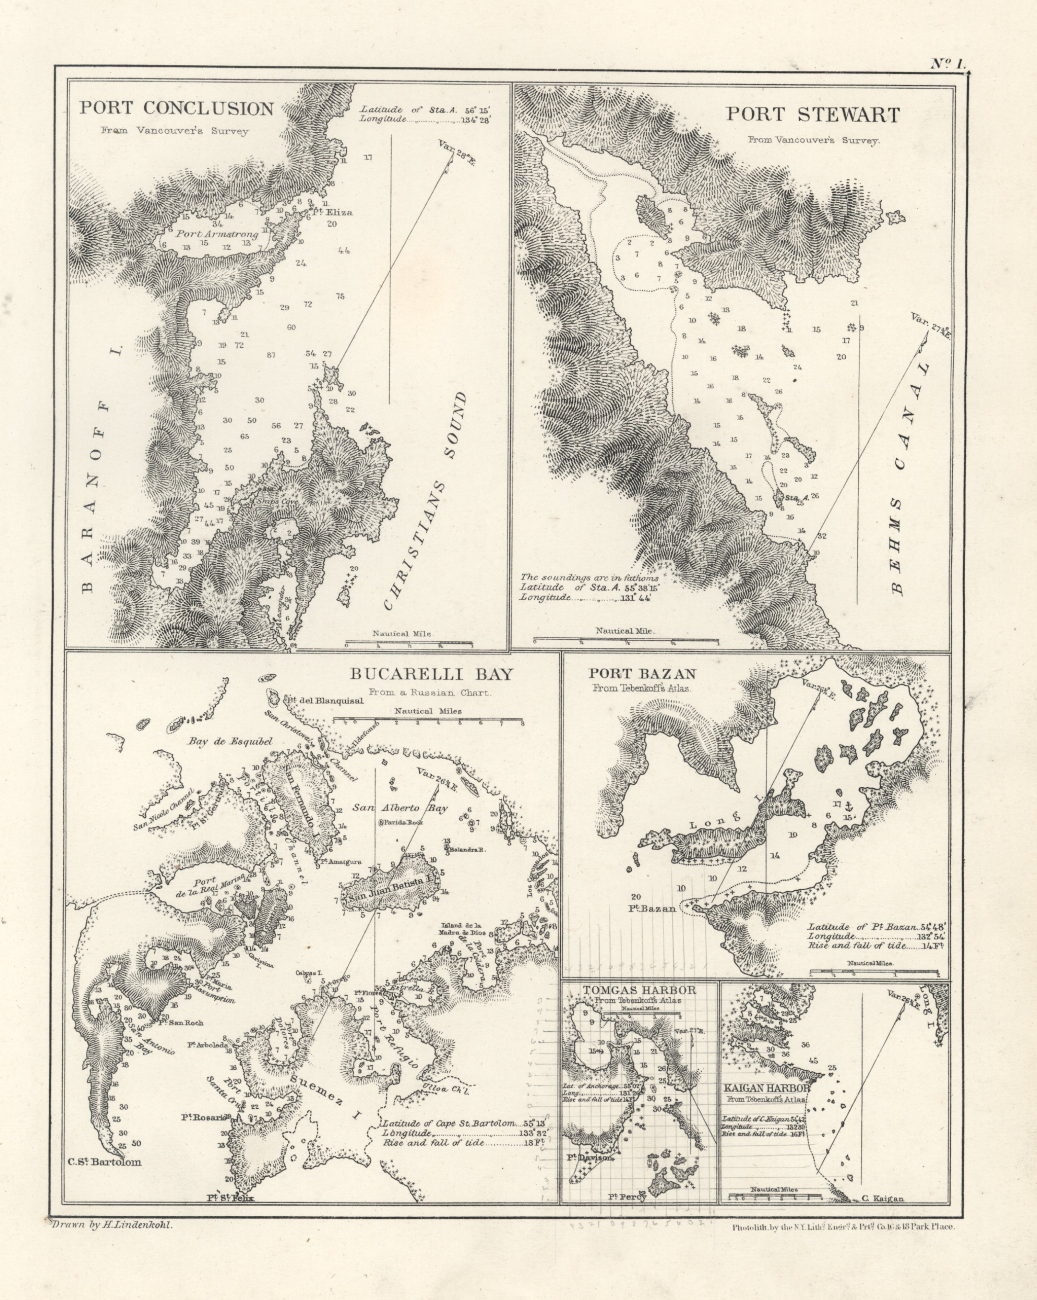 Charts of Port Conclusion, Port Stewart, Bucarelli Bay, Port Bazan, TomgasHarbor, and Kaigan Harbor